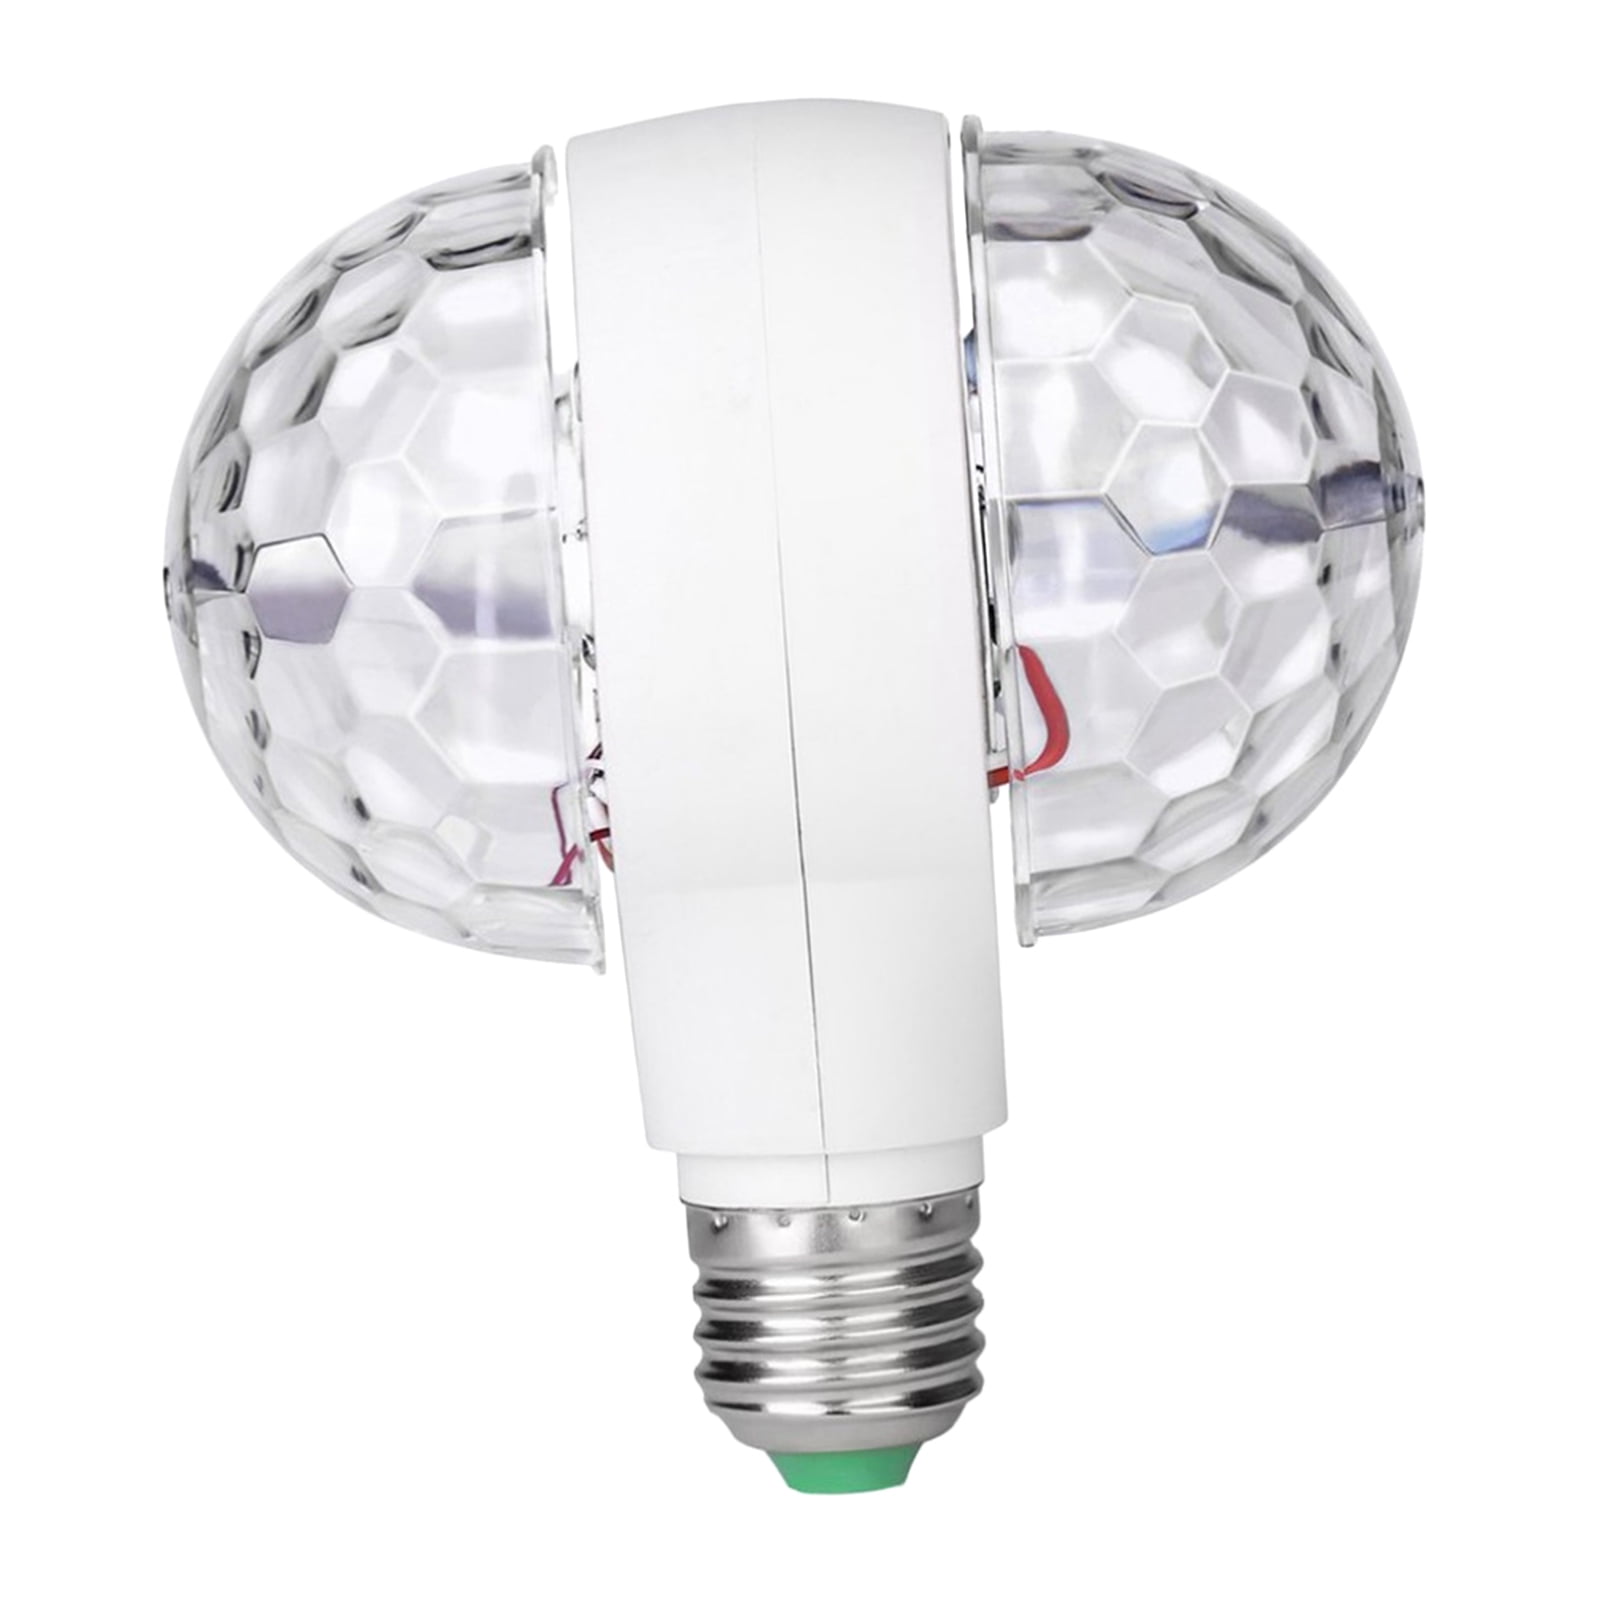 Bulb Rotating Party Xmas 2-Head E27 LED Lights Crystal Ball Disco Stage RGB Lamp 